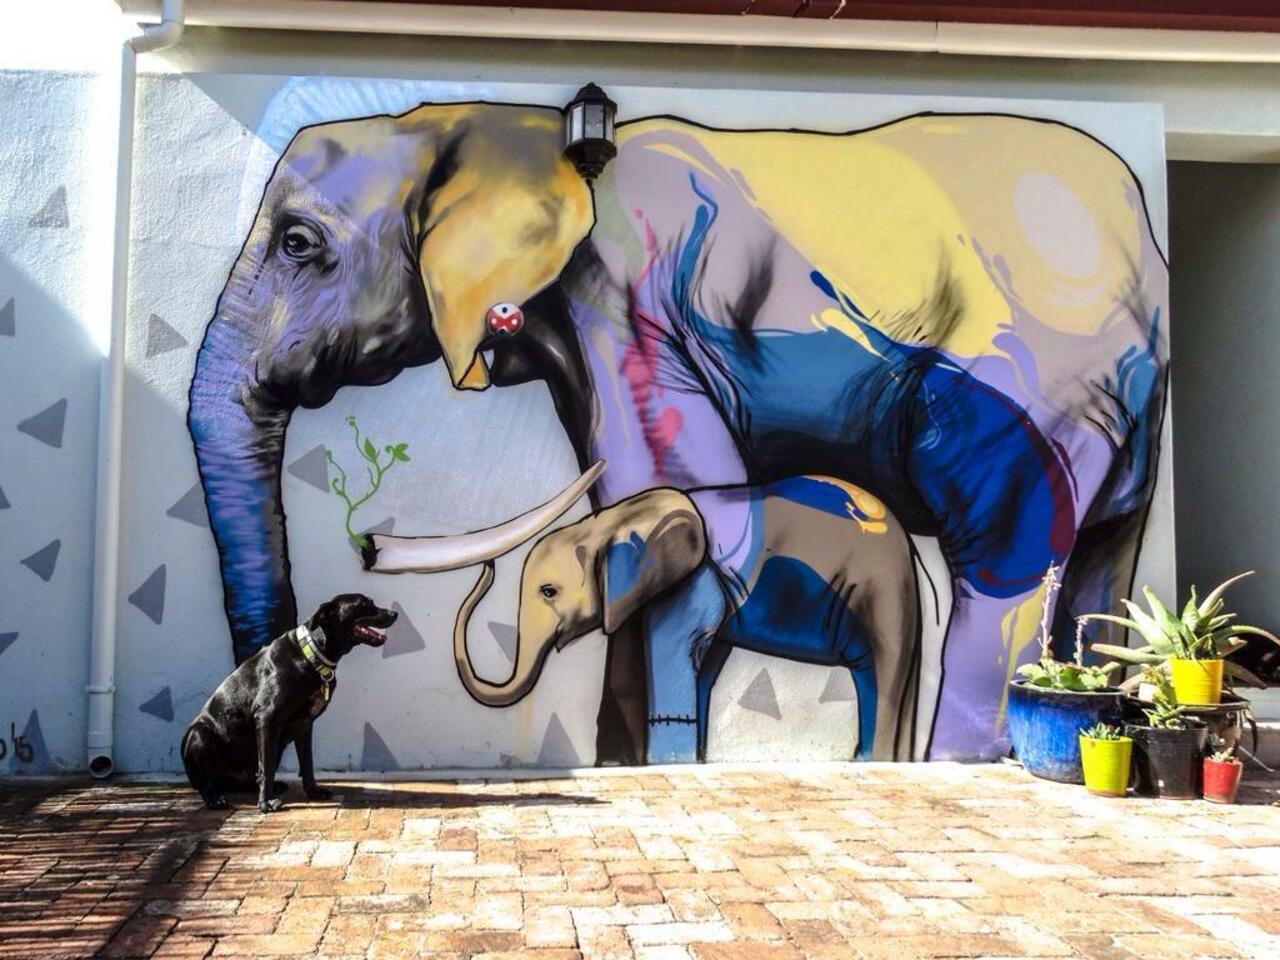 Latest nature in Street Art piece by Falko Paints In Cape Town

#art #mural #graffiti #streetart http://t.co/uvgBm6EQ6j